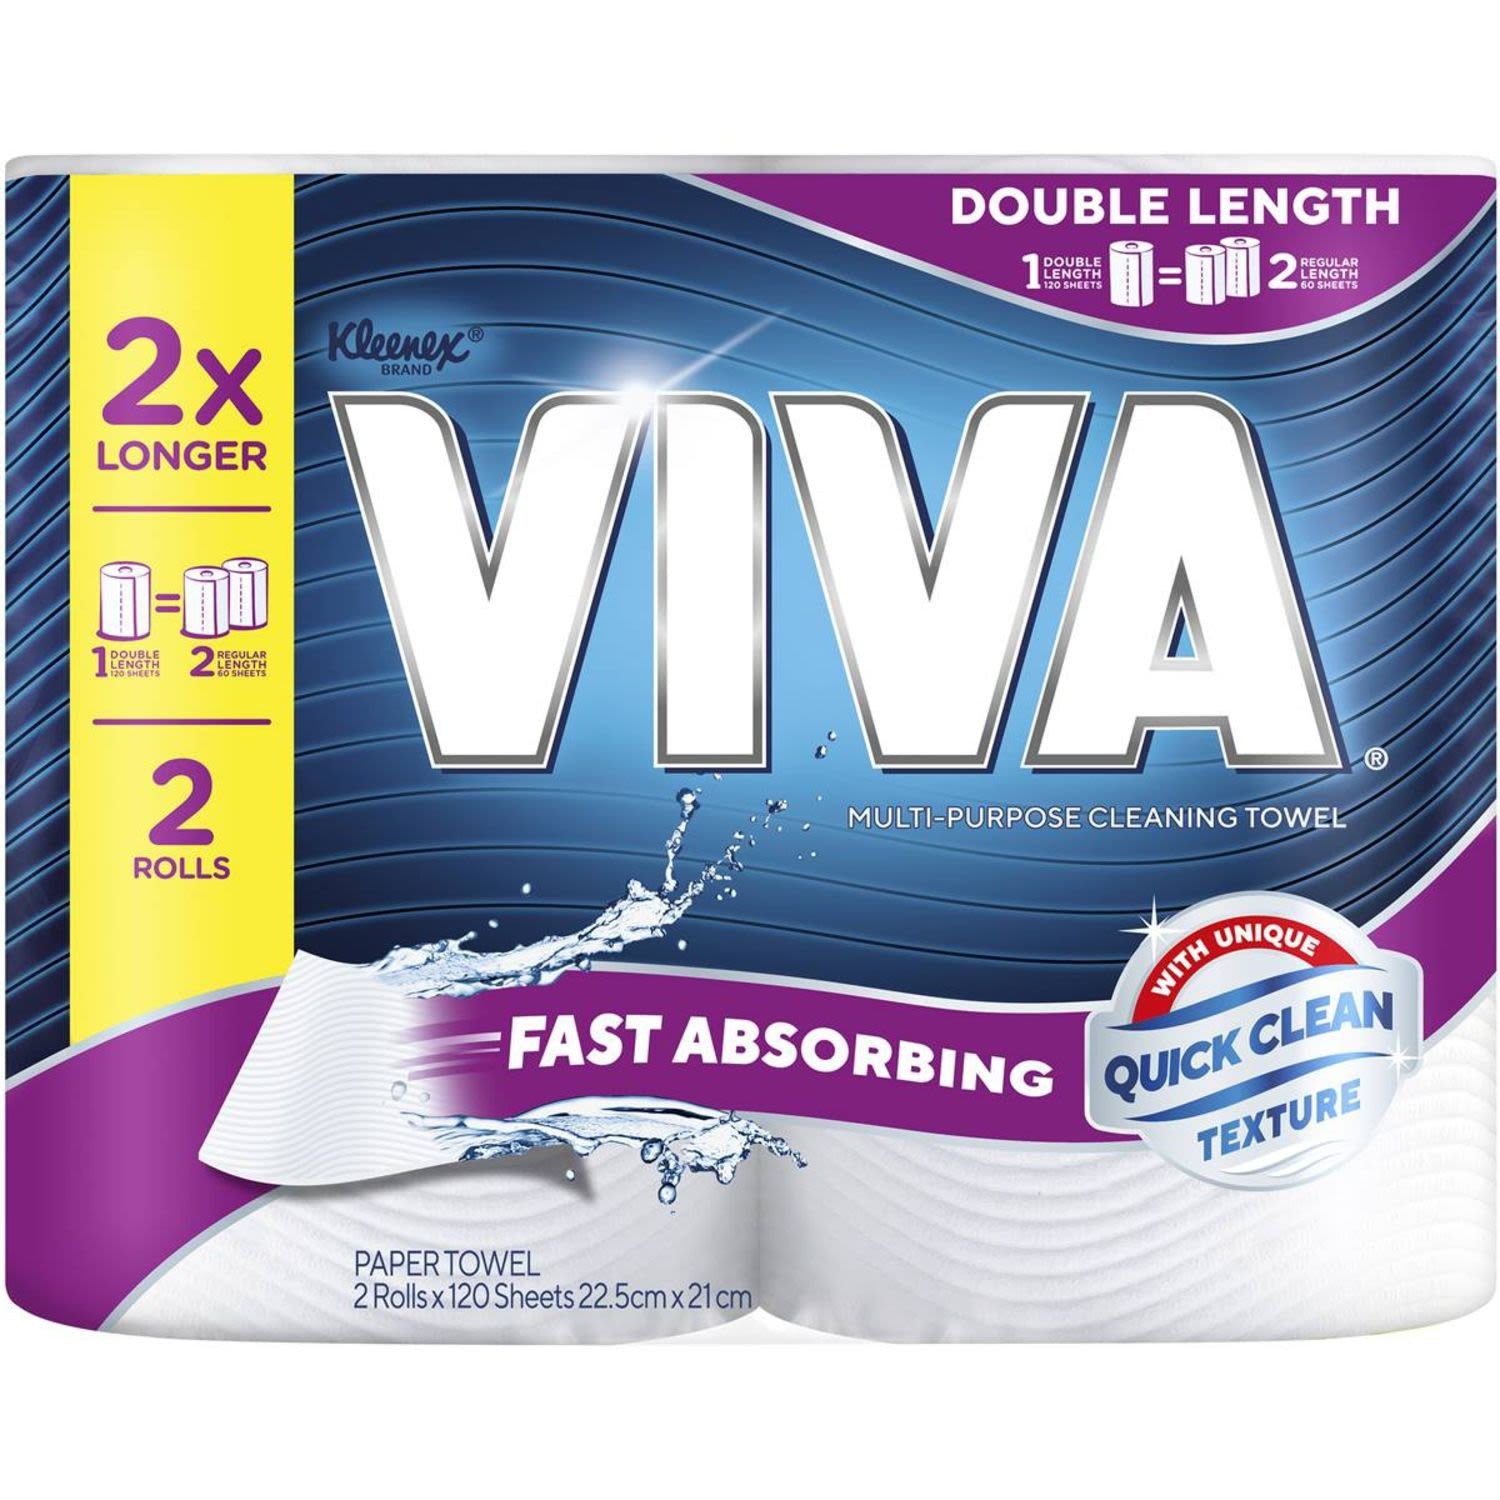 Viva Paper Towel White Double Length 120 sheets 2pk